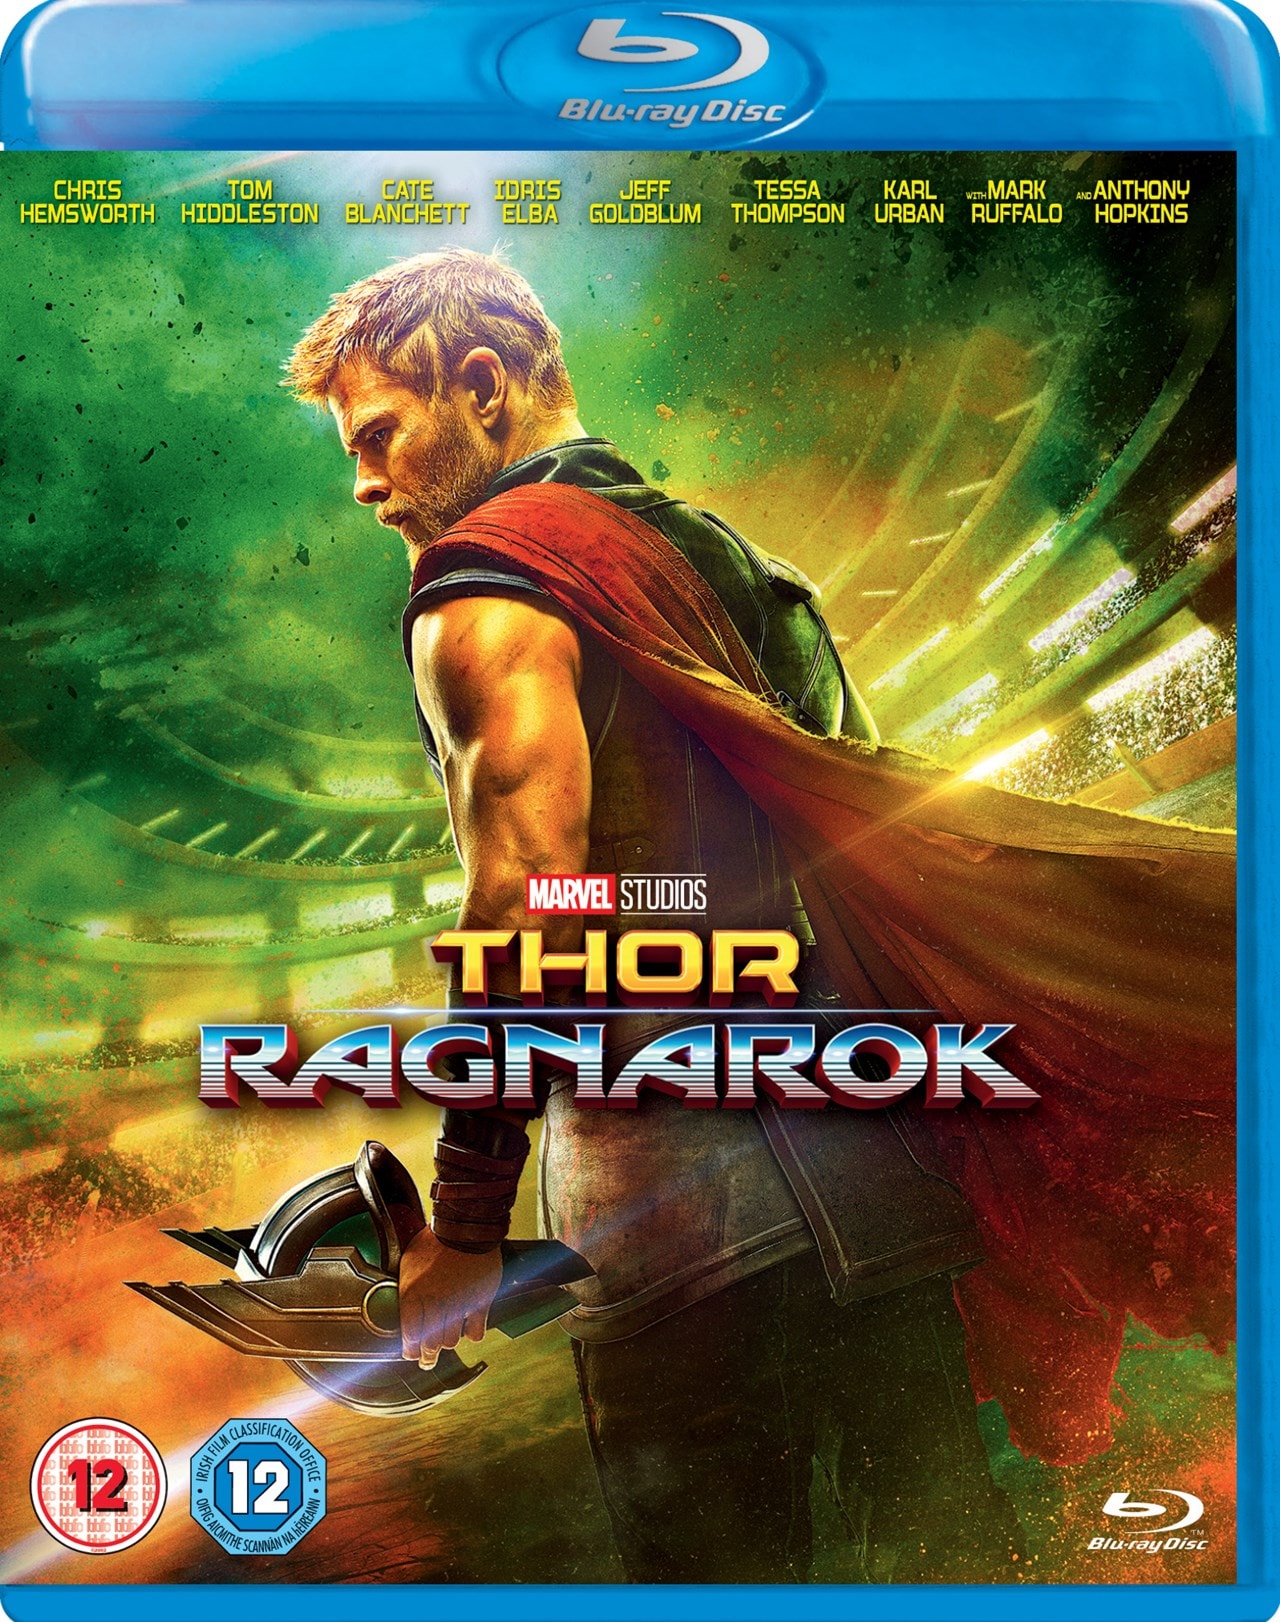 Thor: Ragnarok | Blu-ray | Free shipping over £20 | HMV Store